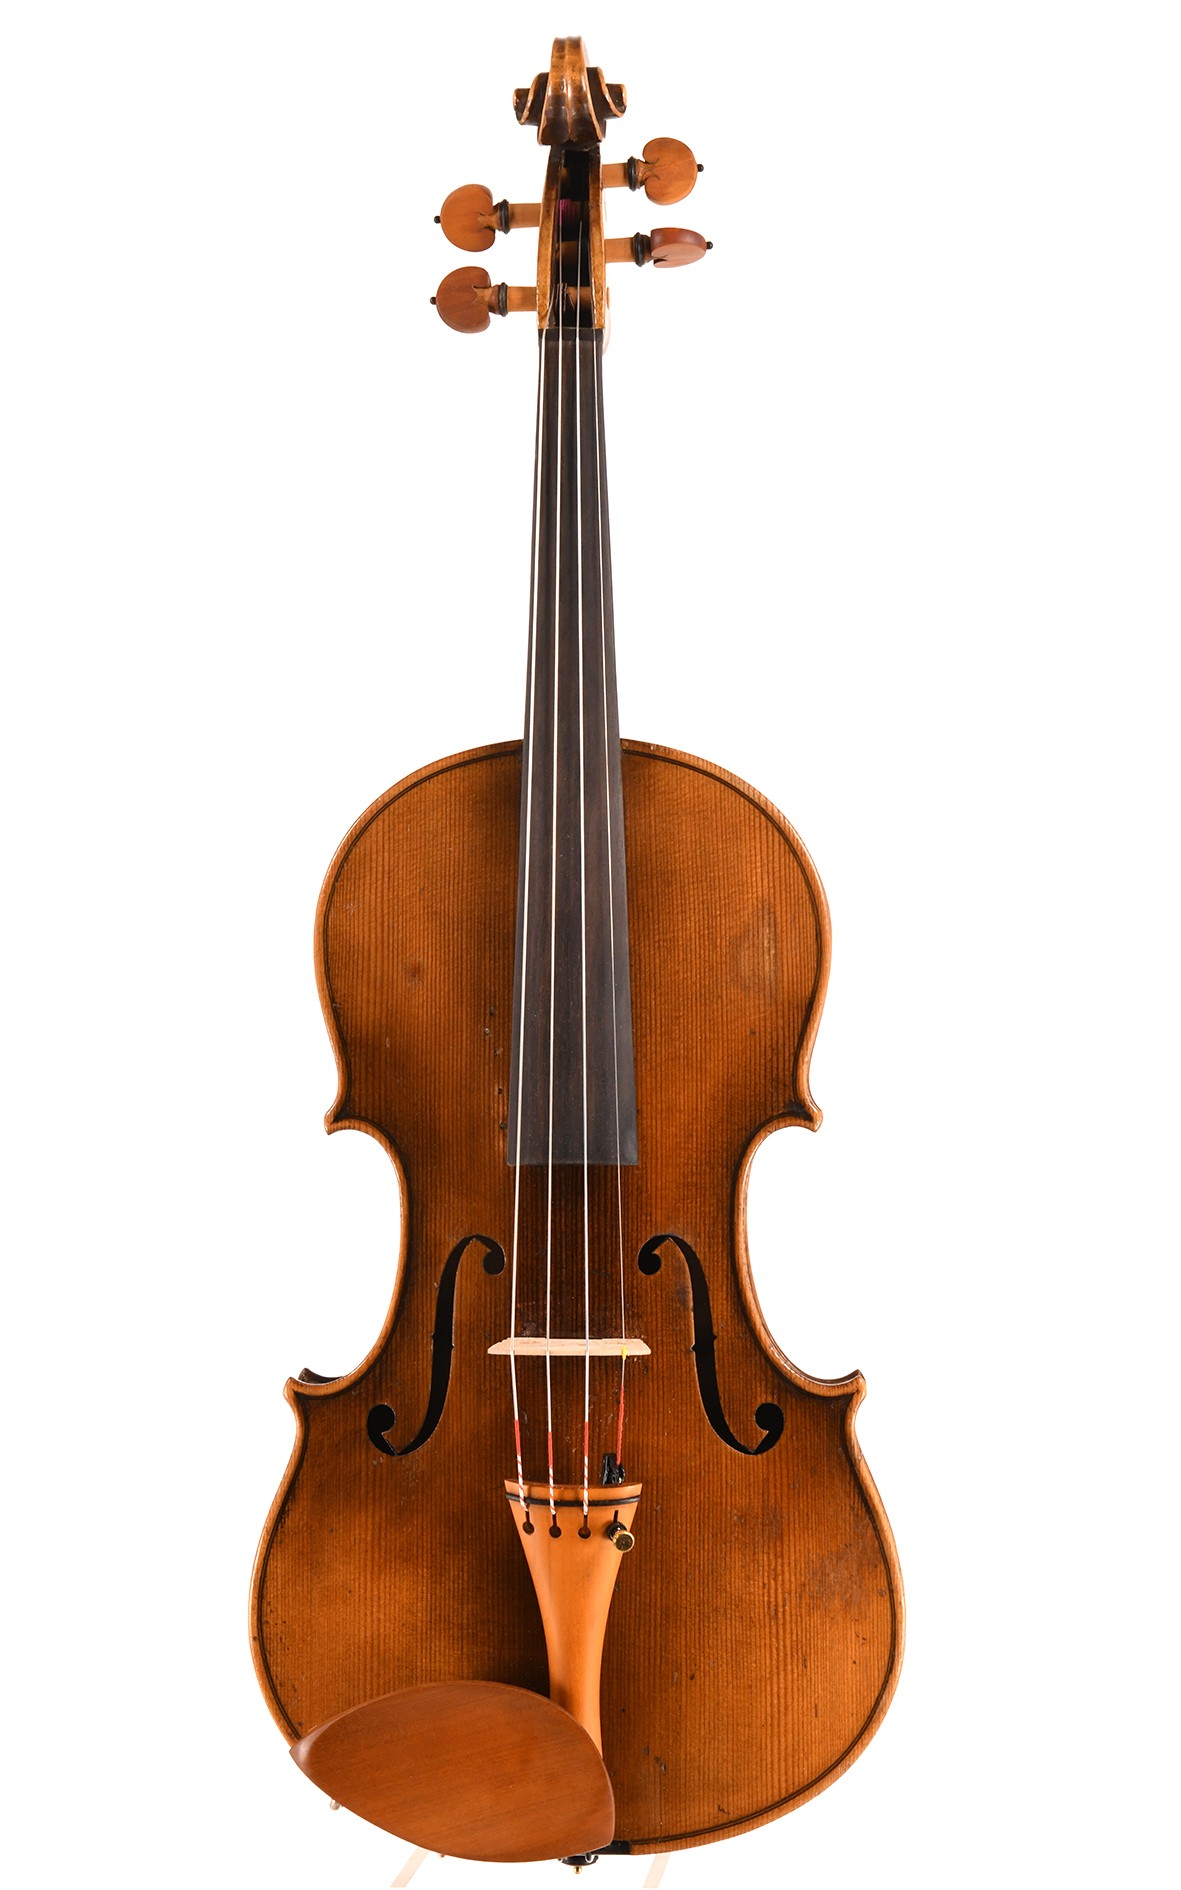 Violon ancien saxon, probablement Schuster & Co. - Stradivarius